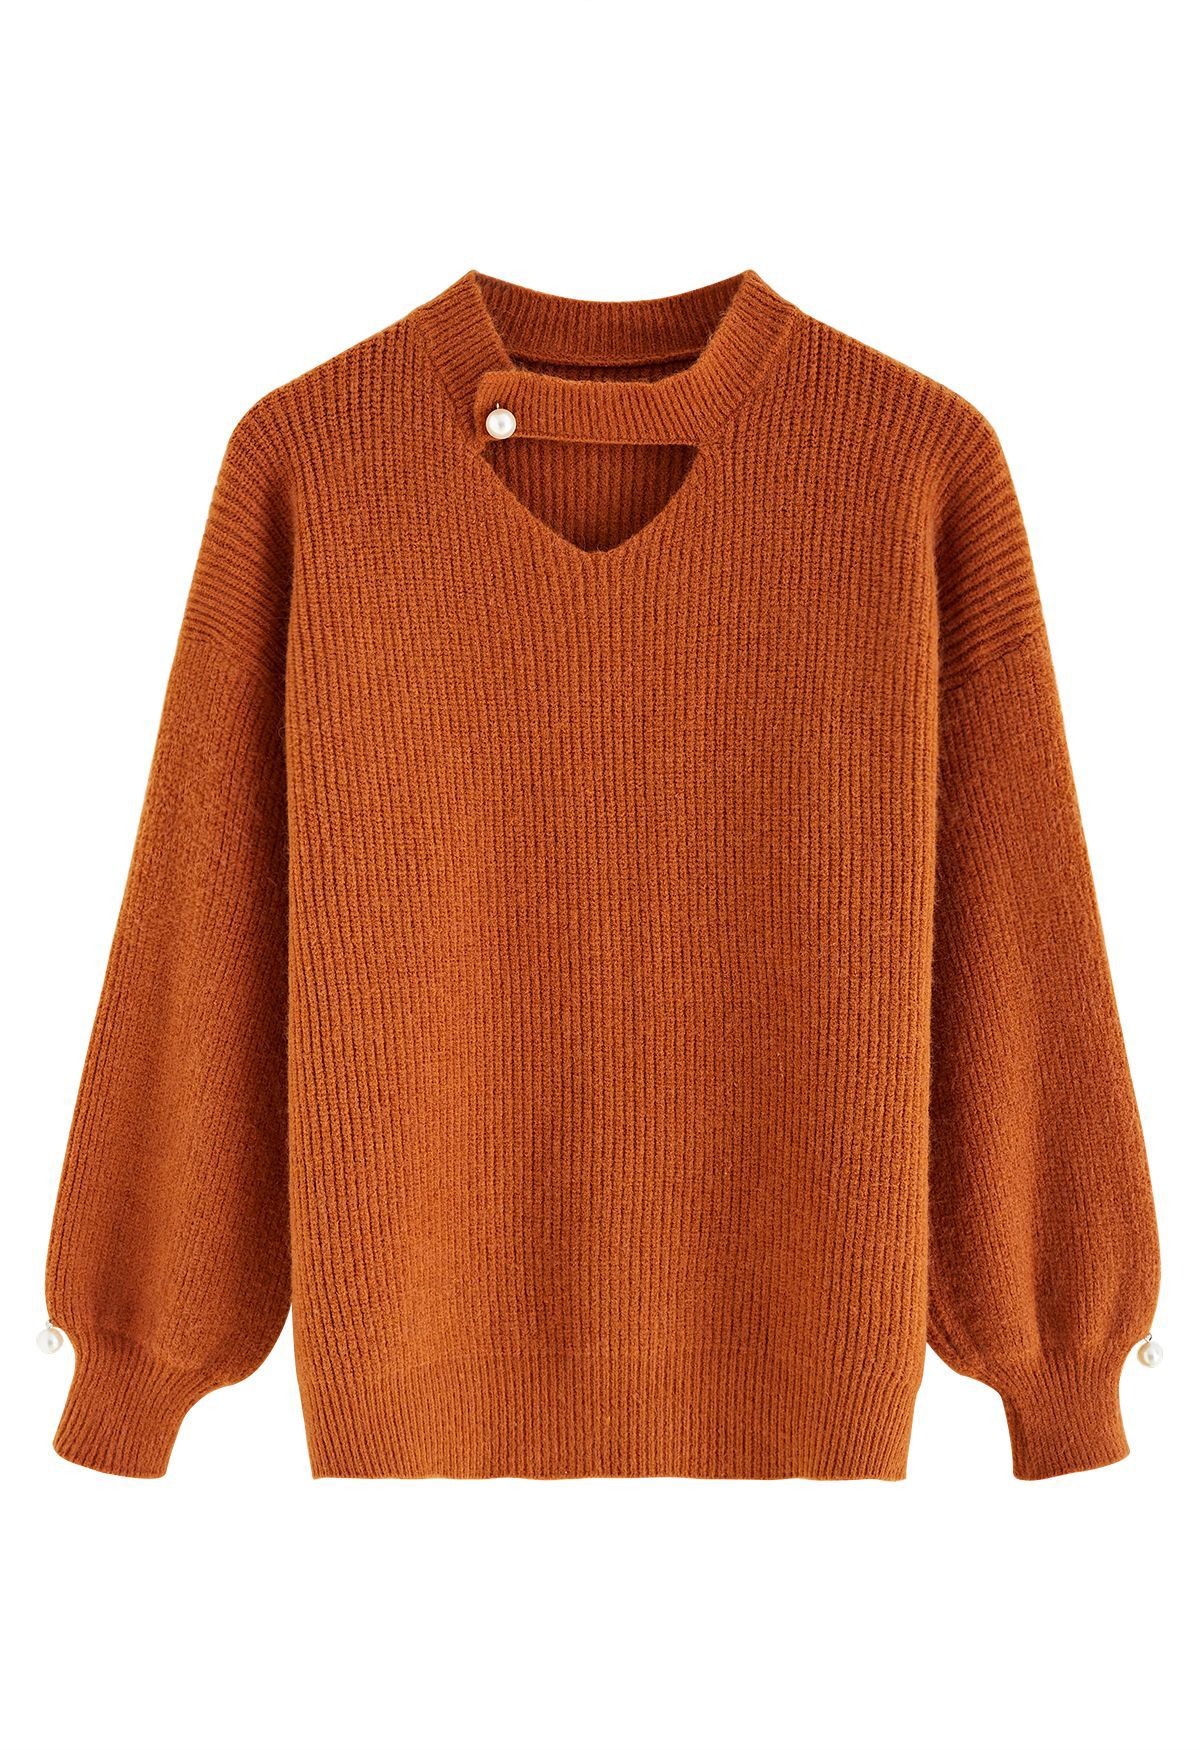 Pearl Decor Choker Neck Ribbed Knit Sweater in Pumpkin